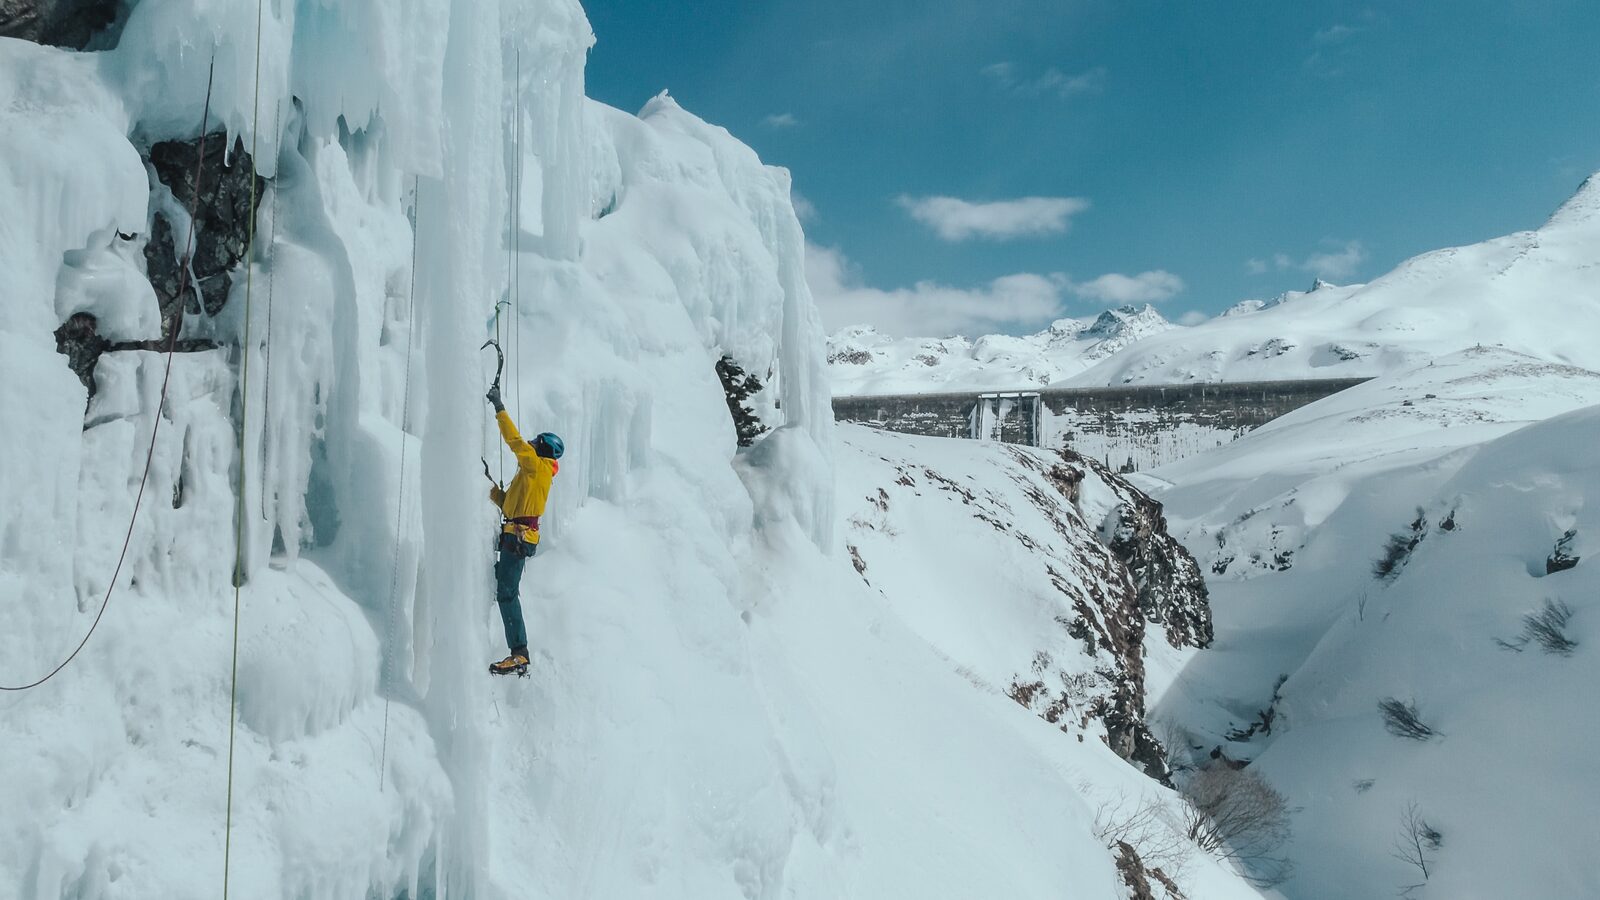 Icefall climbing in the Brandenertal 